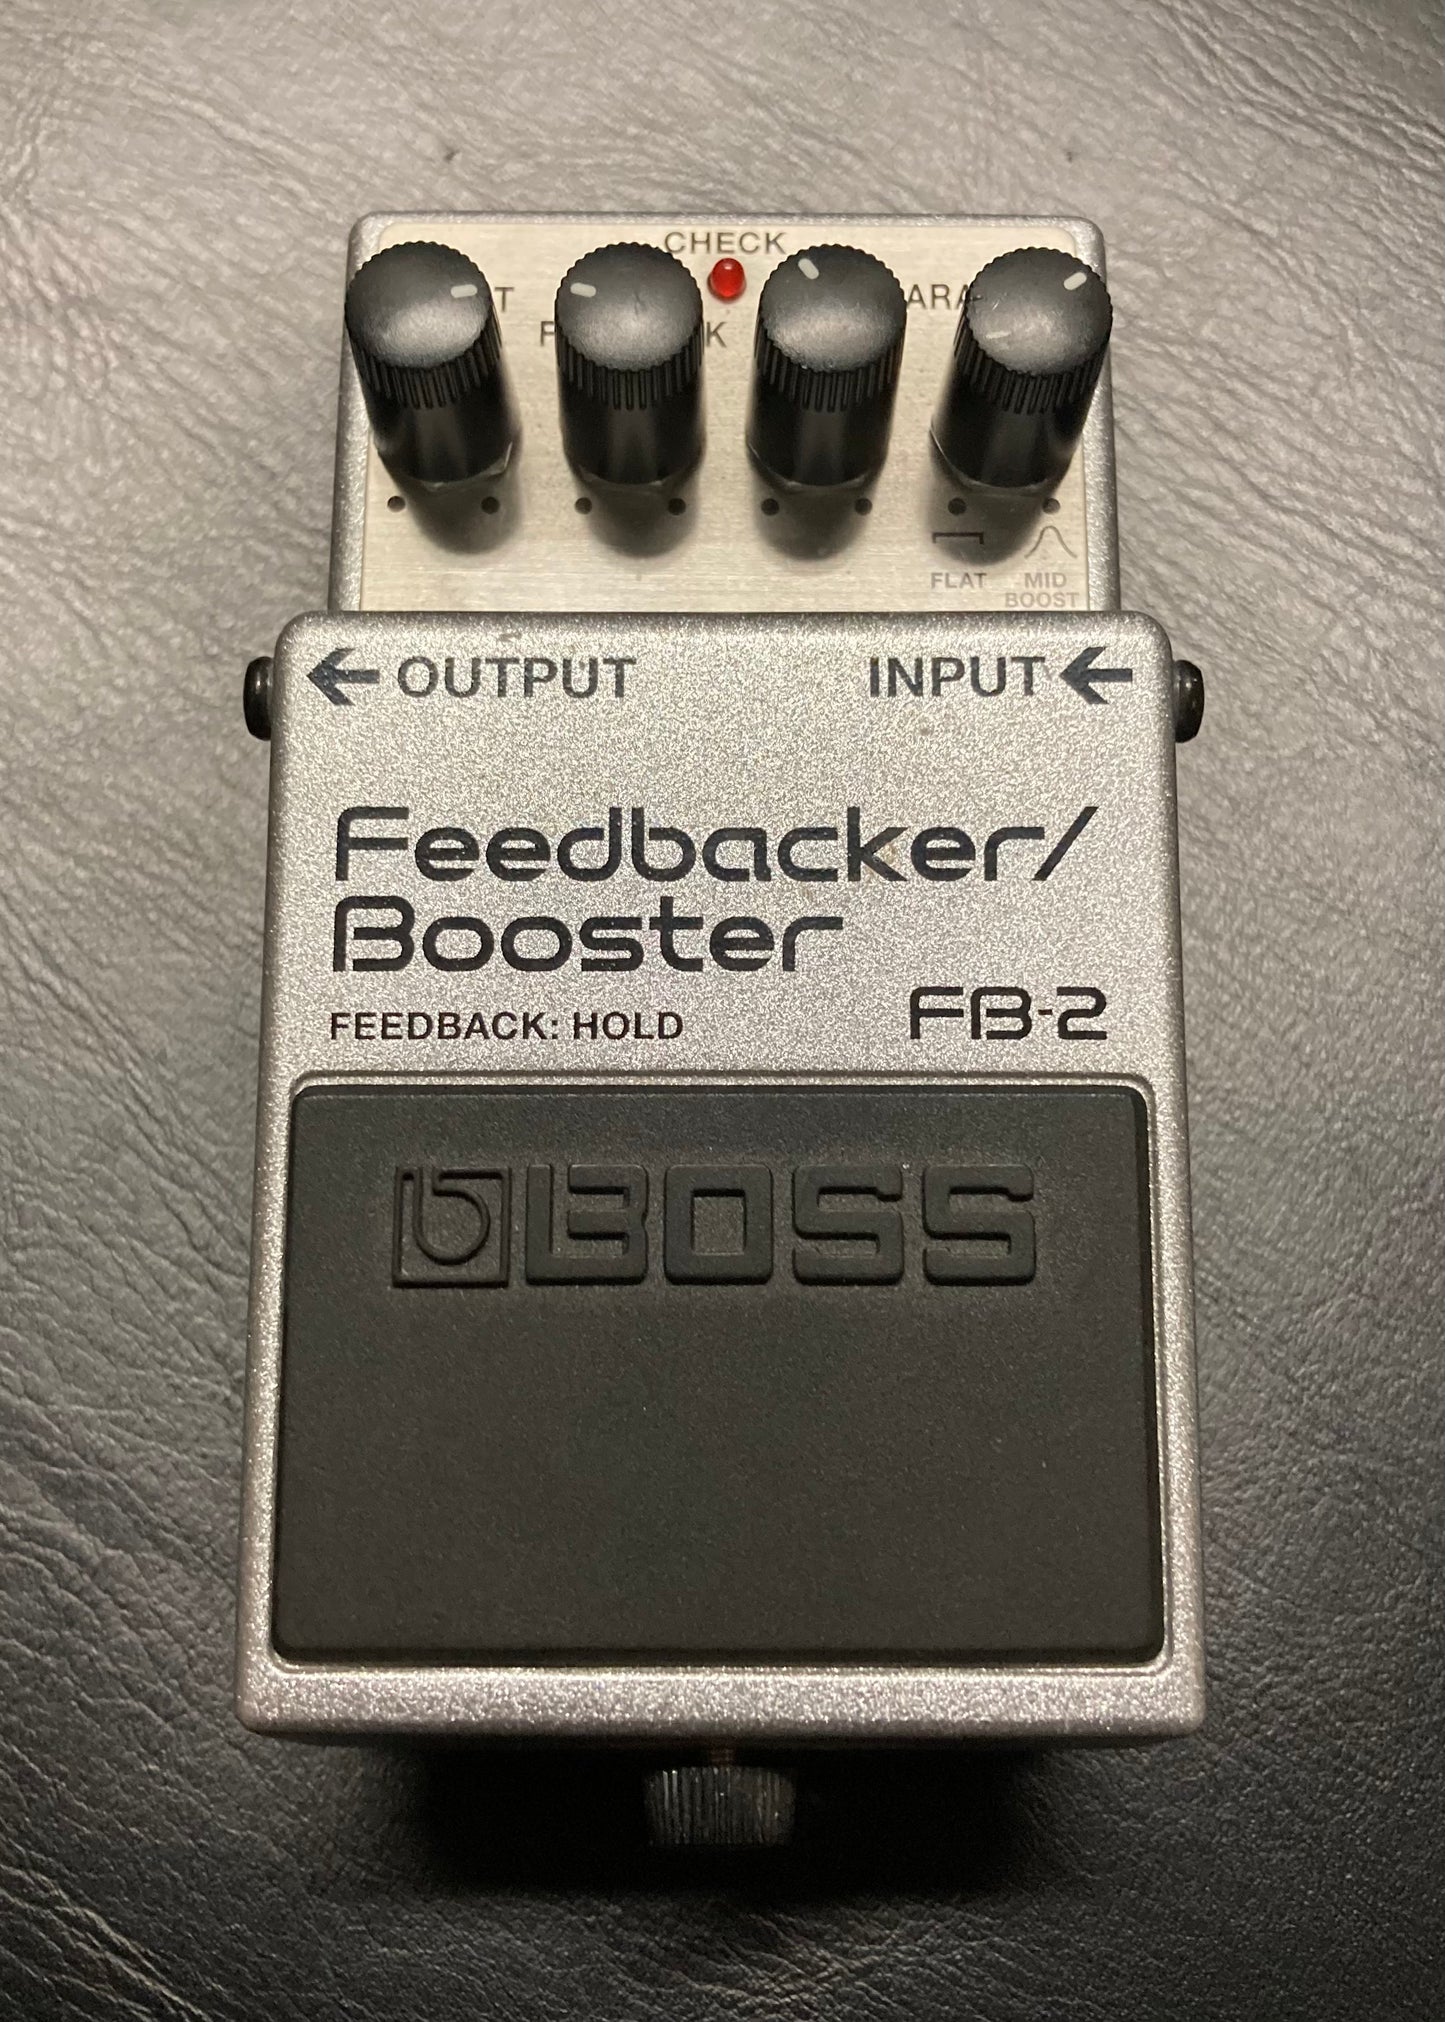 Boss Feedback/Booster FB-2 (Used)